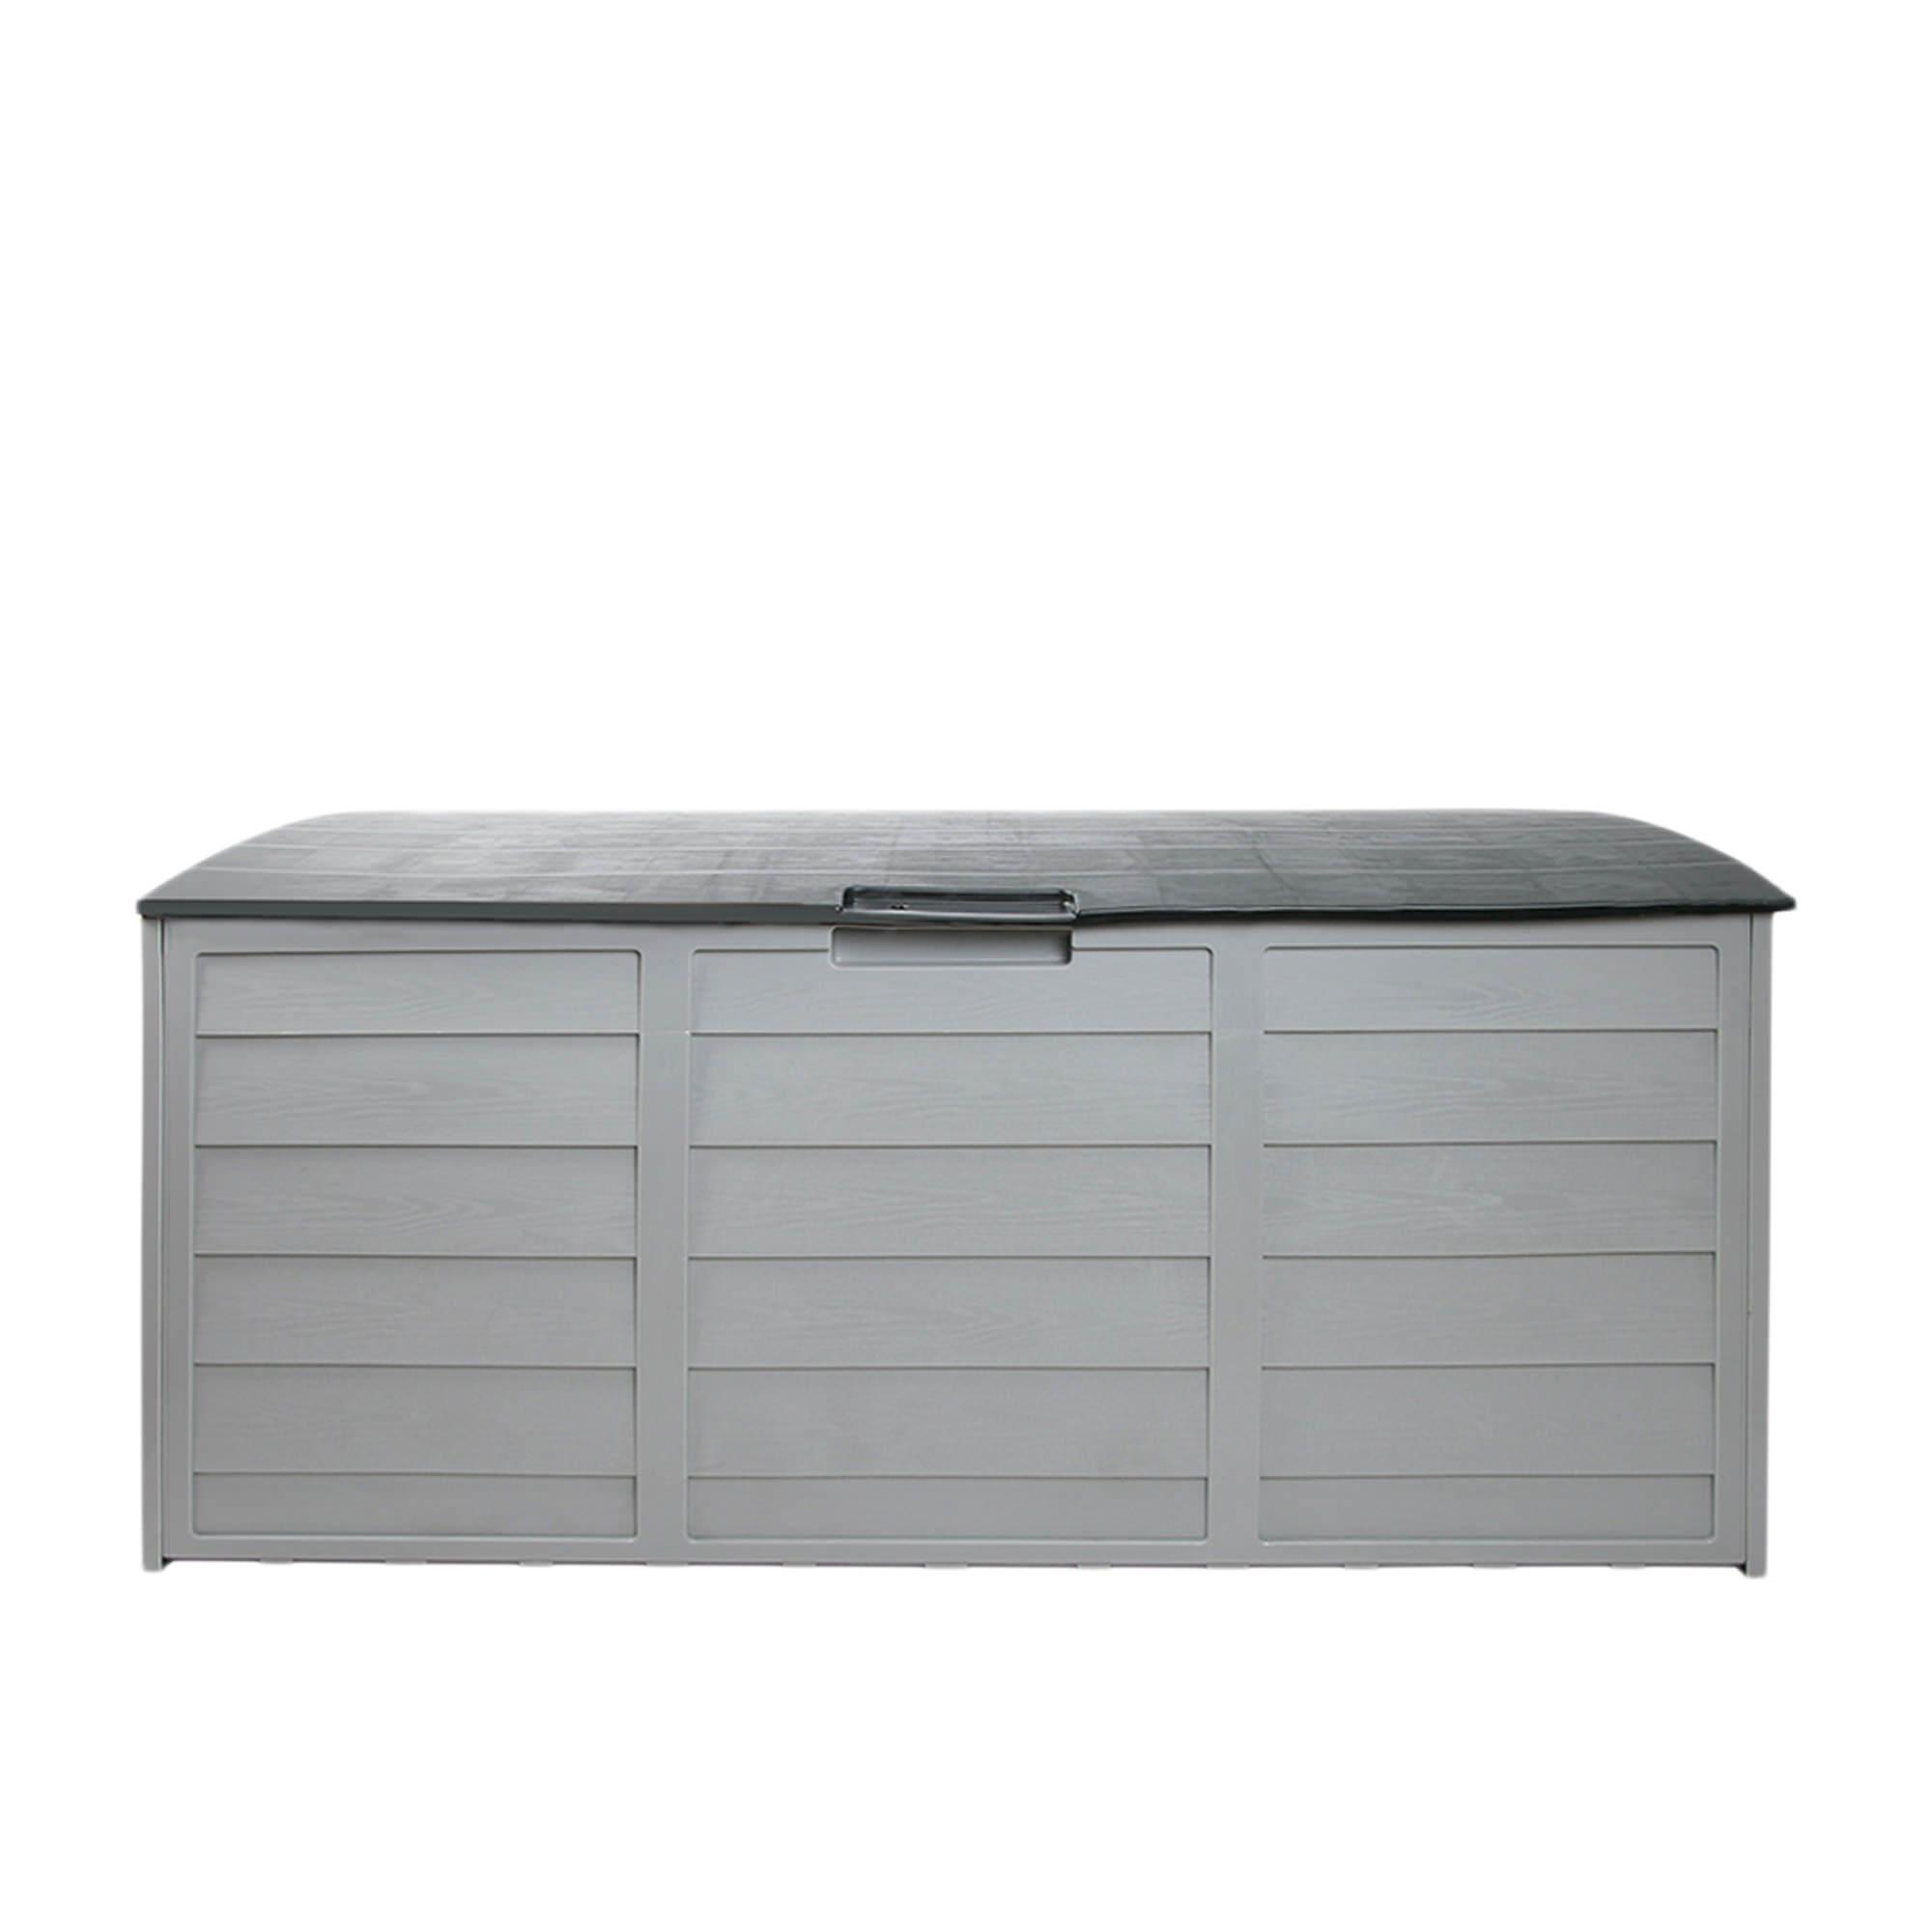 Gardeon Giantz Outdoor Storage Box 290L Grey Image 5